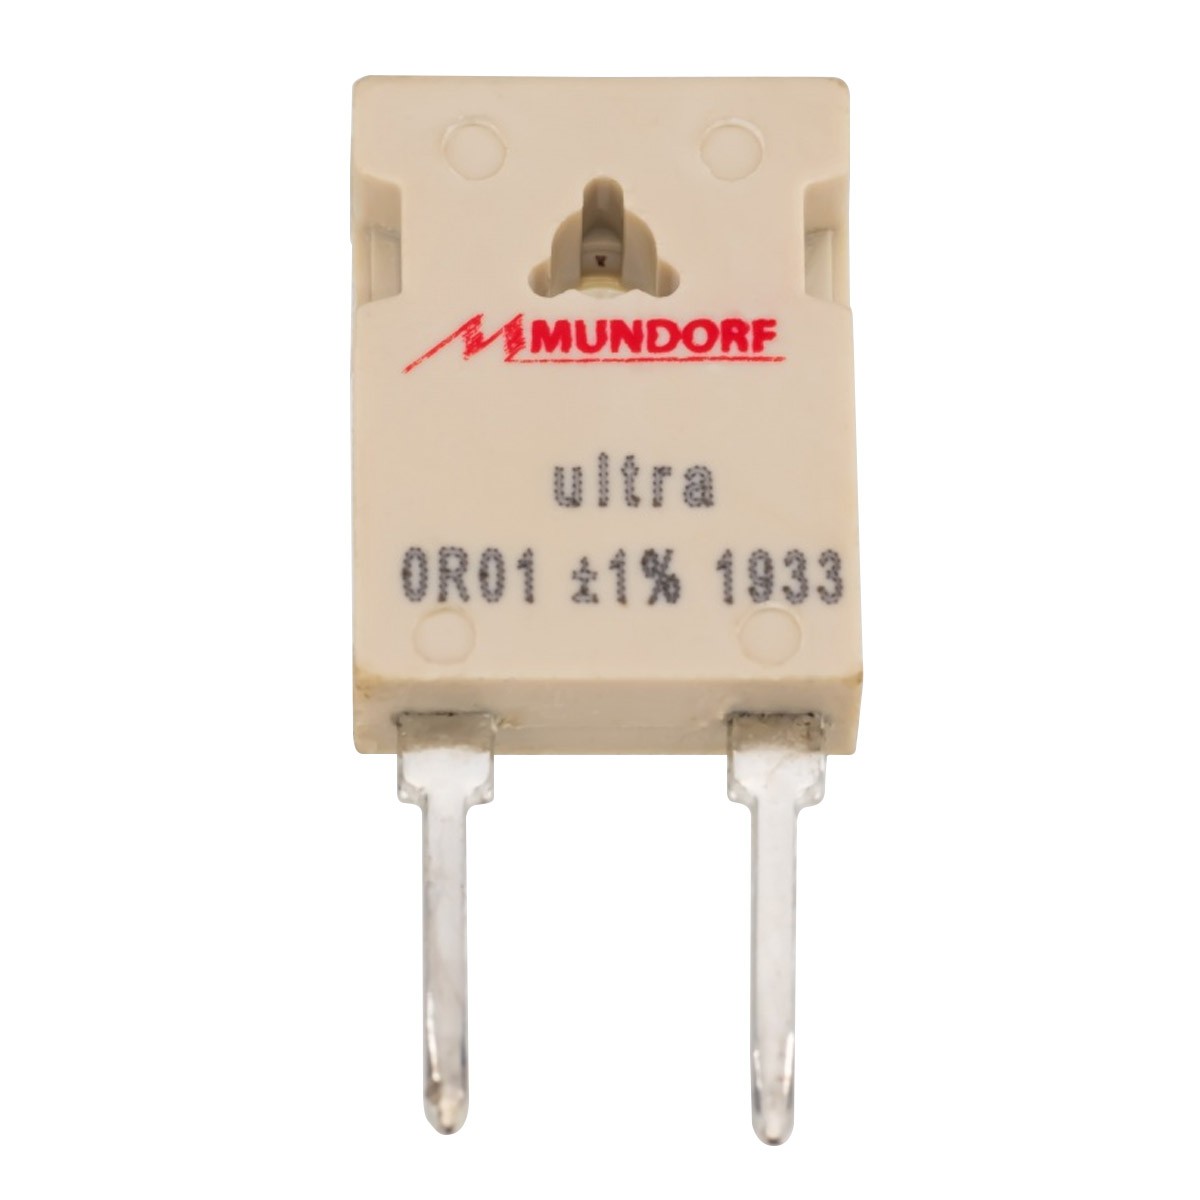 MUNDORF MRESIST ULTRA Resistor 30W 0.56 Ohm